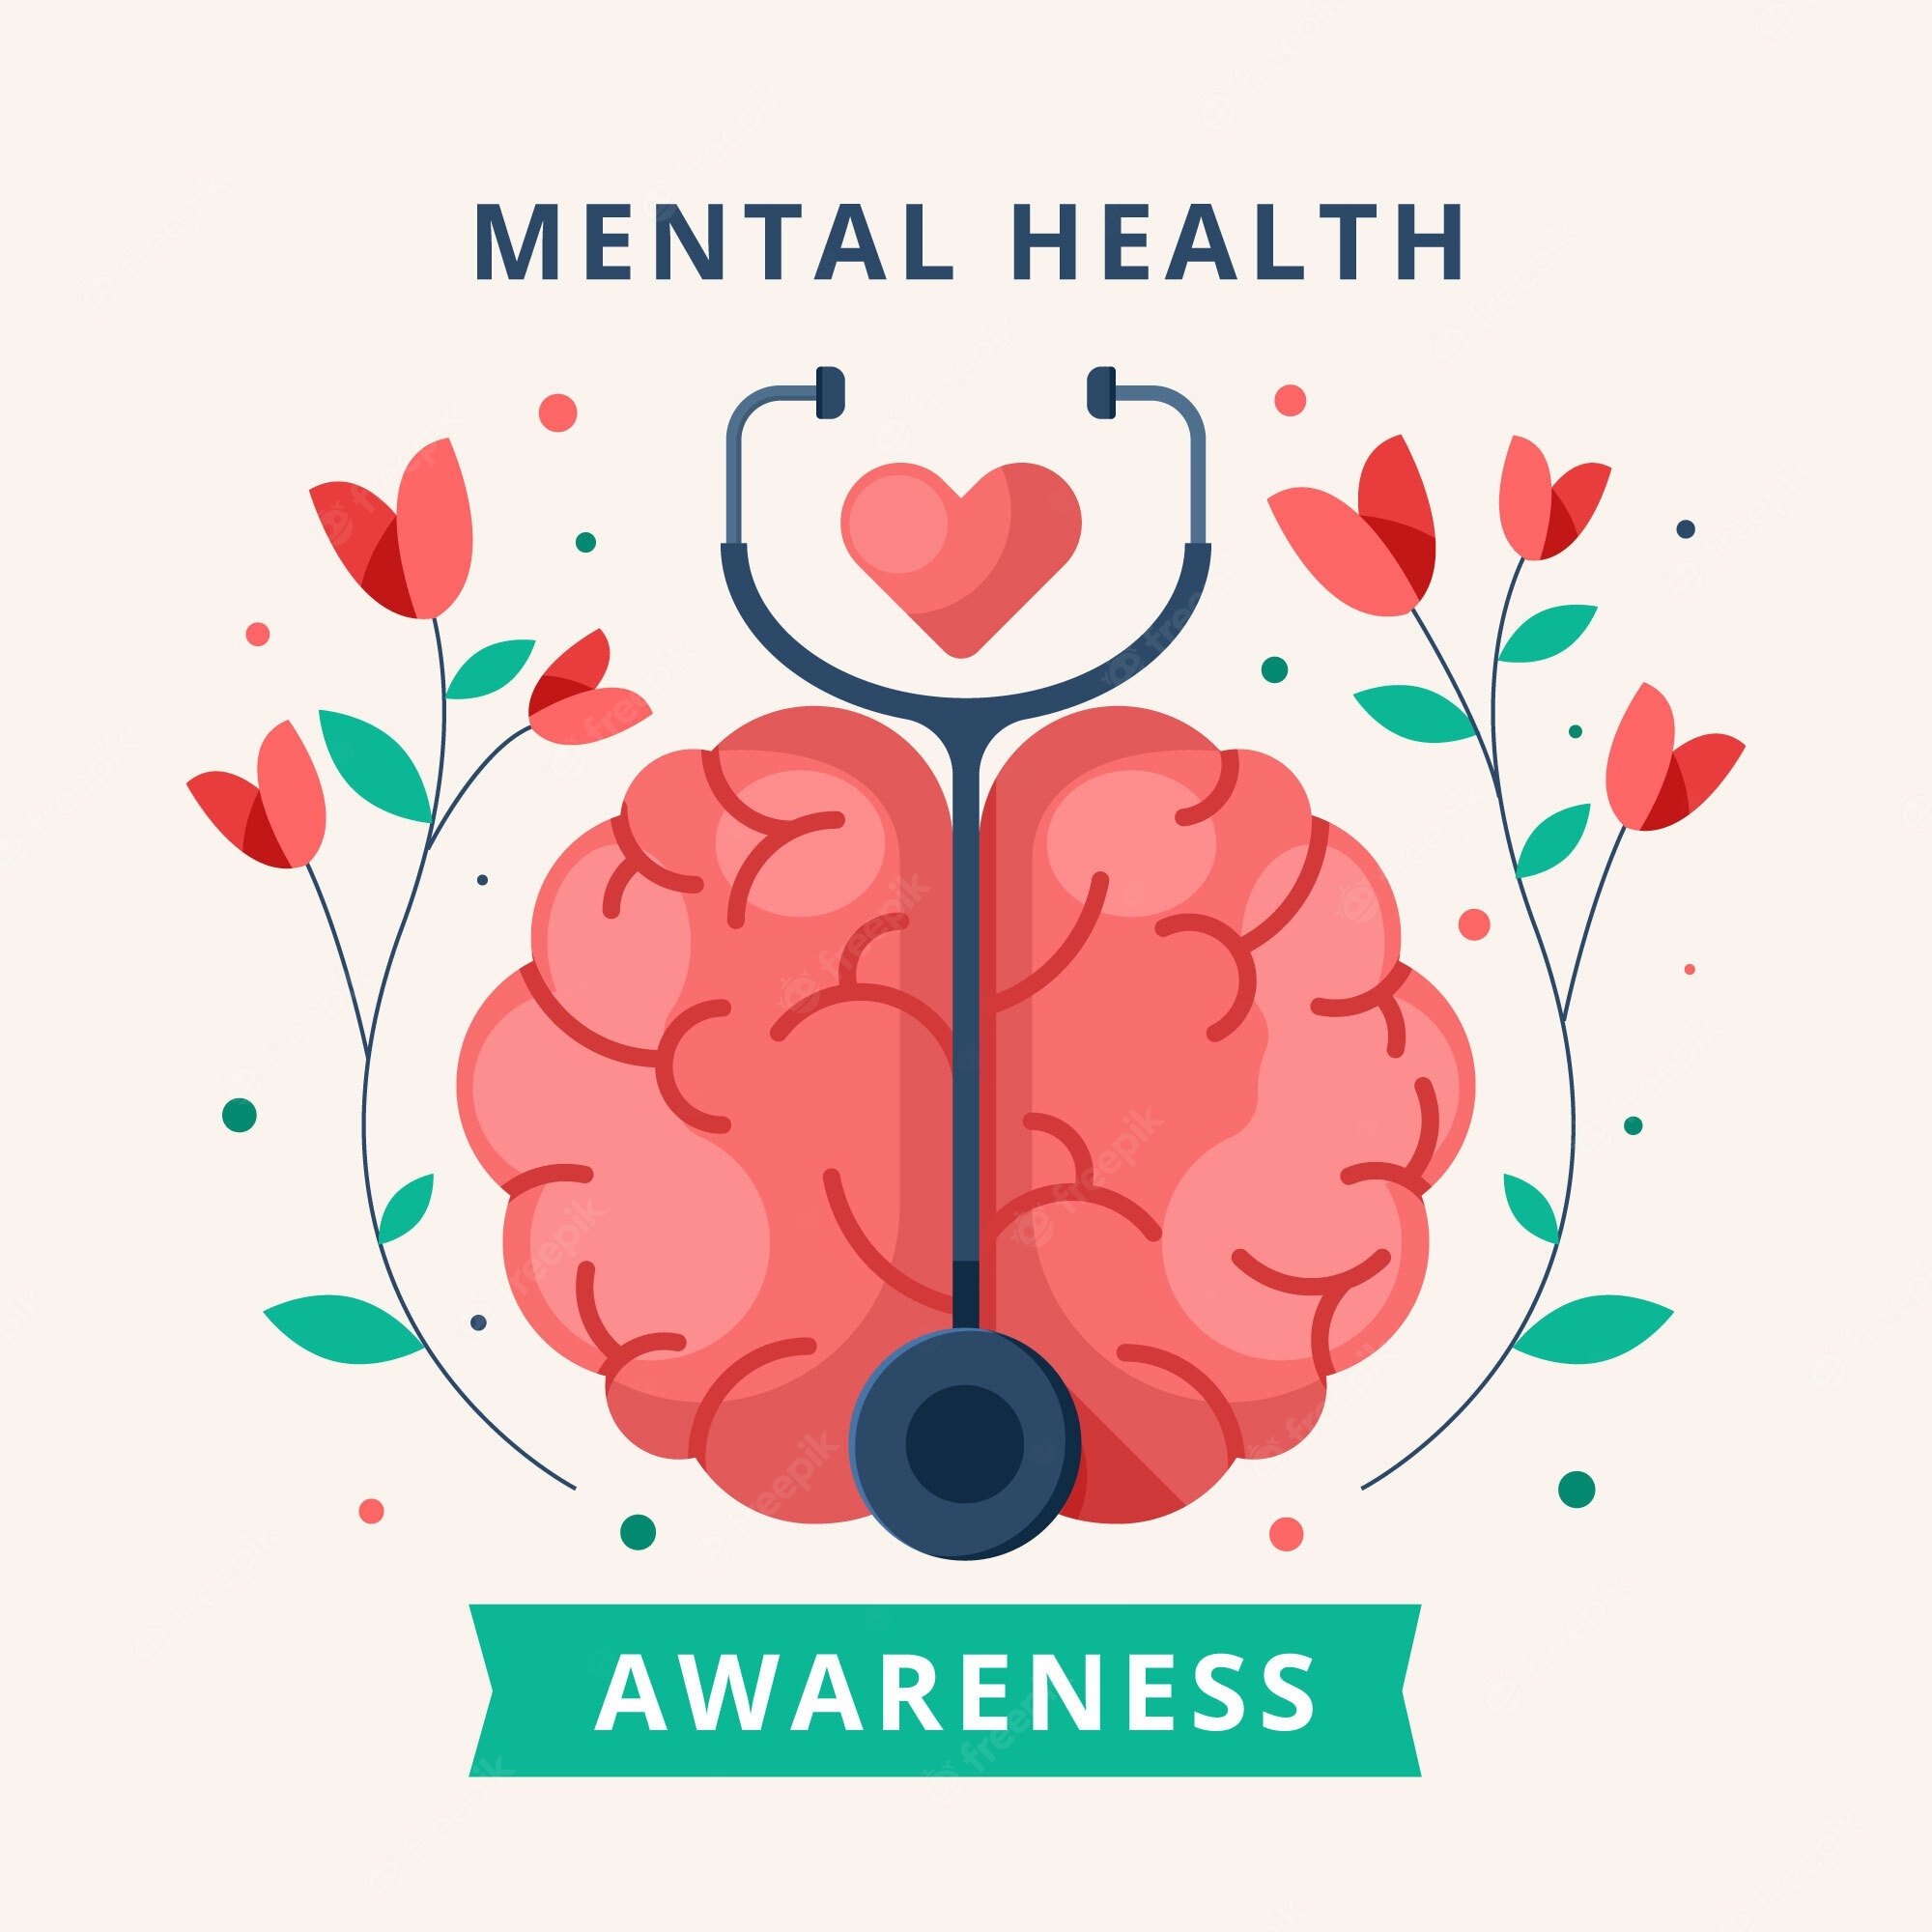 mental-health-awareness-concept_23-2148514643